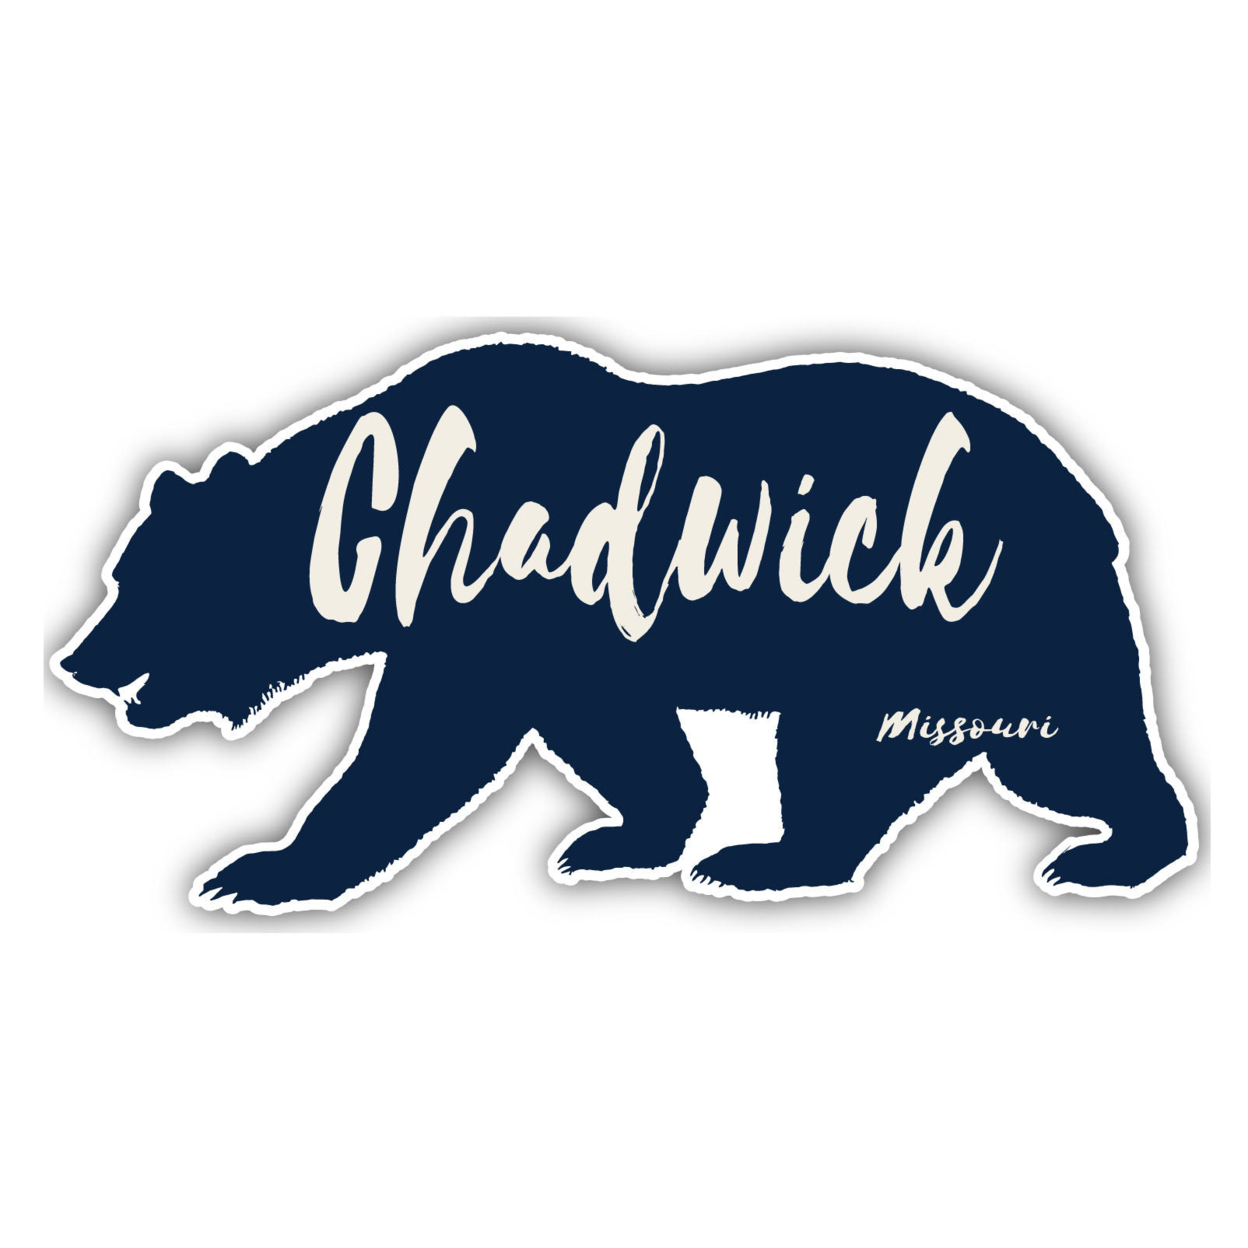 Chadwick Missouri Souvenir Decorative Stickers (Choose Theme And Size) - 4-Pack, 10-Inch, Tent